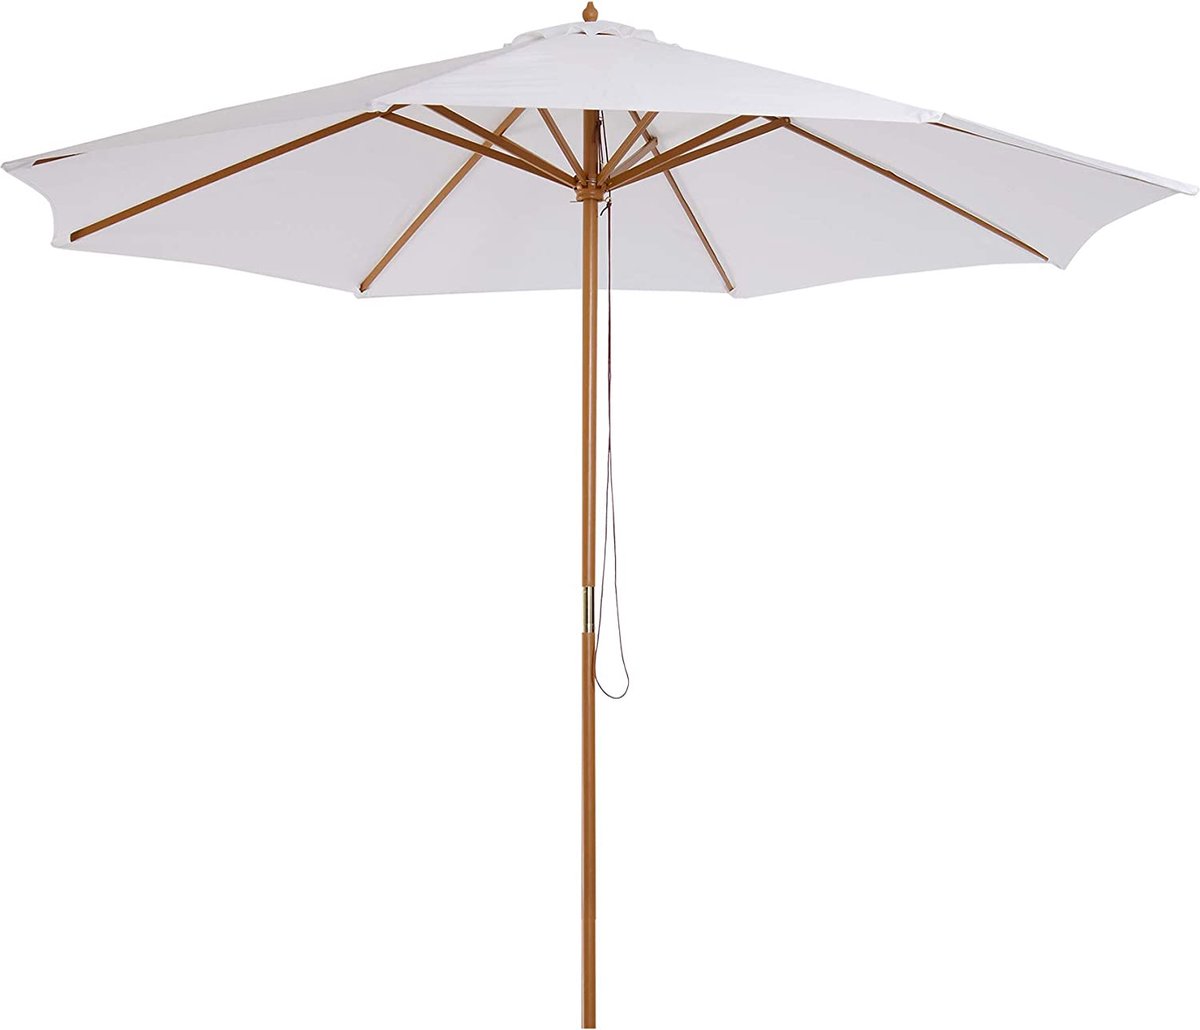 CGPN - houten parasol houten parasol tuinscherm balkonparasol 3m wit